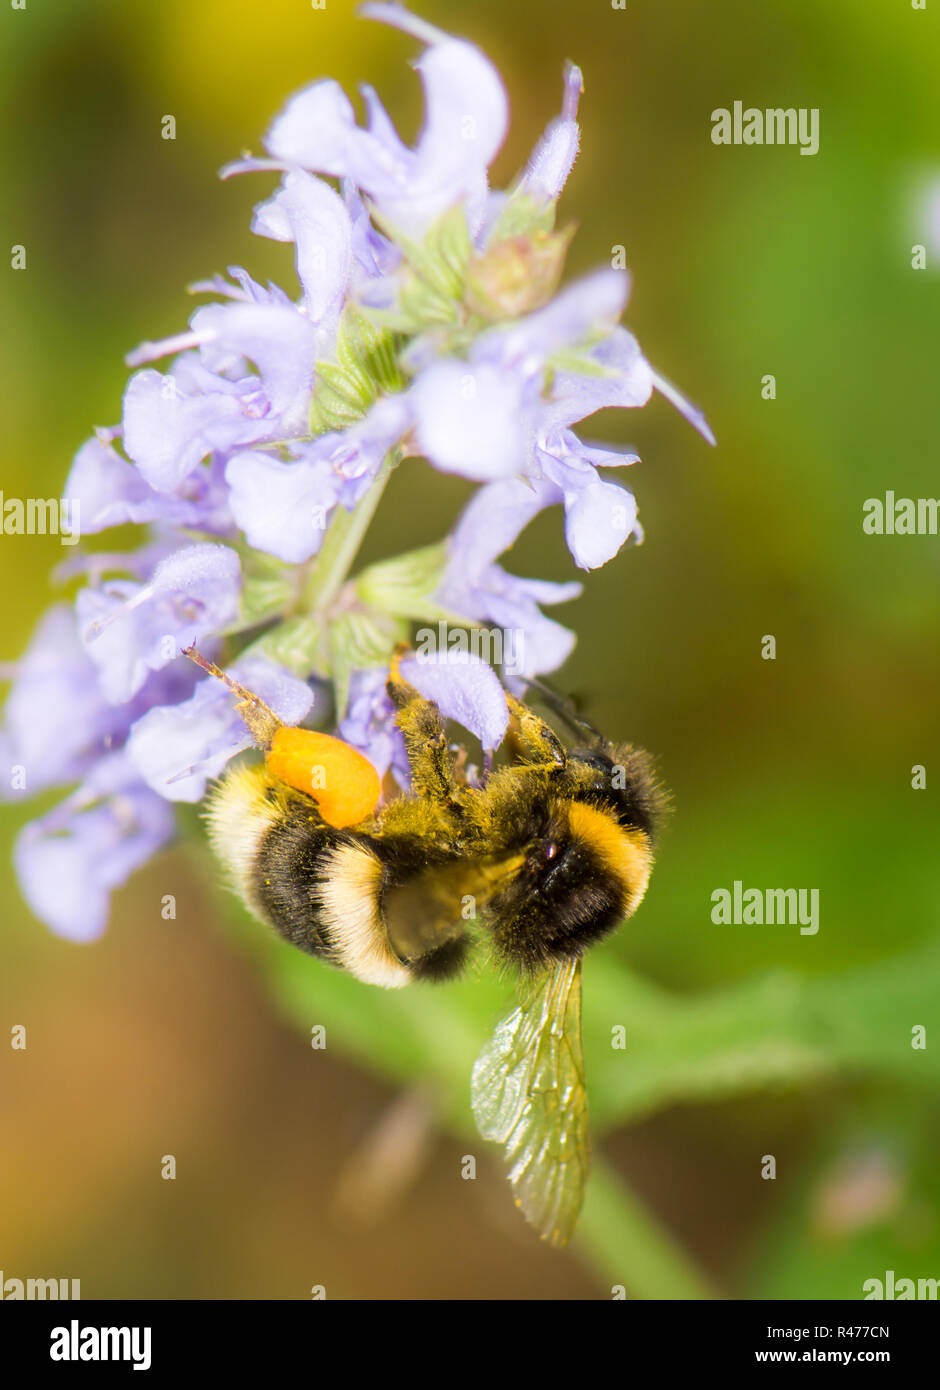 Bumblebee full of pollen Stock Photo